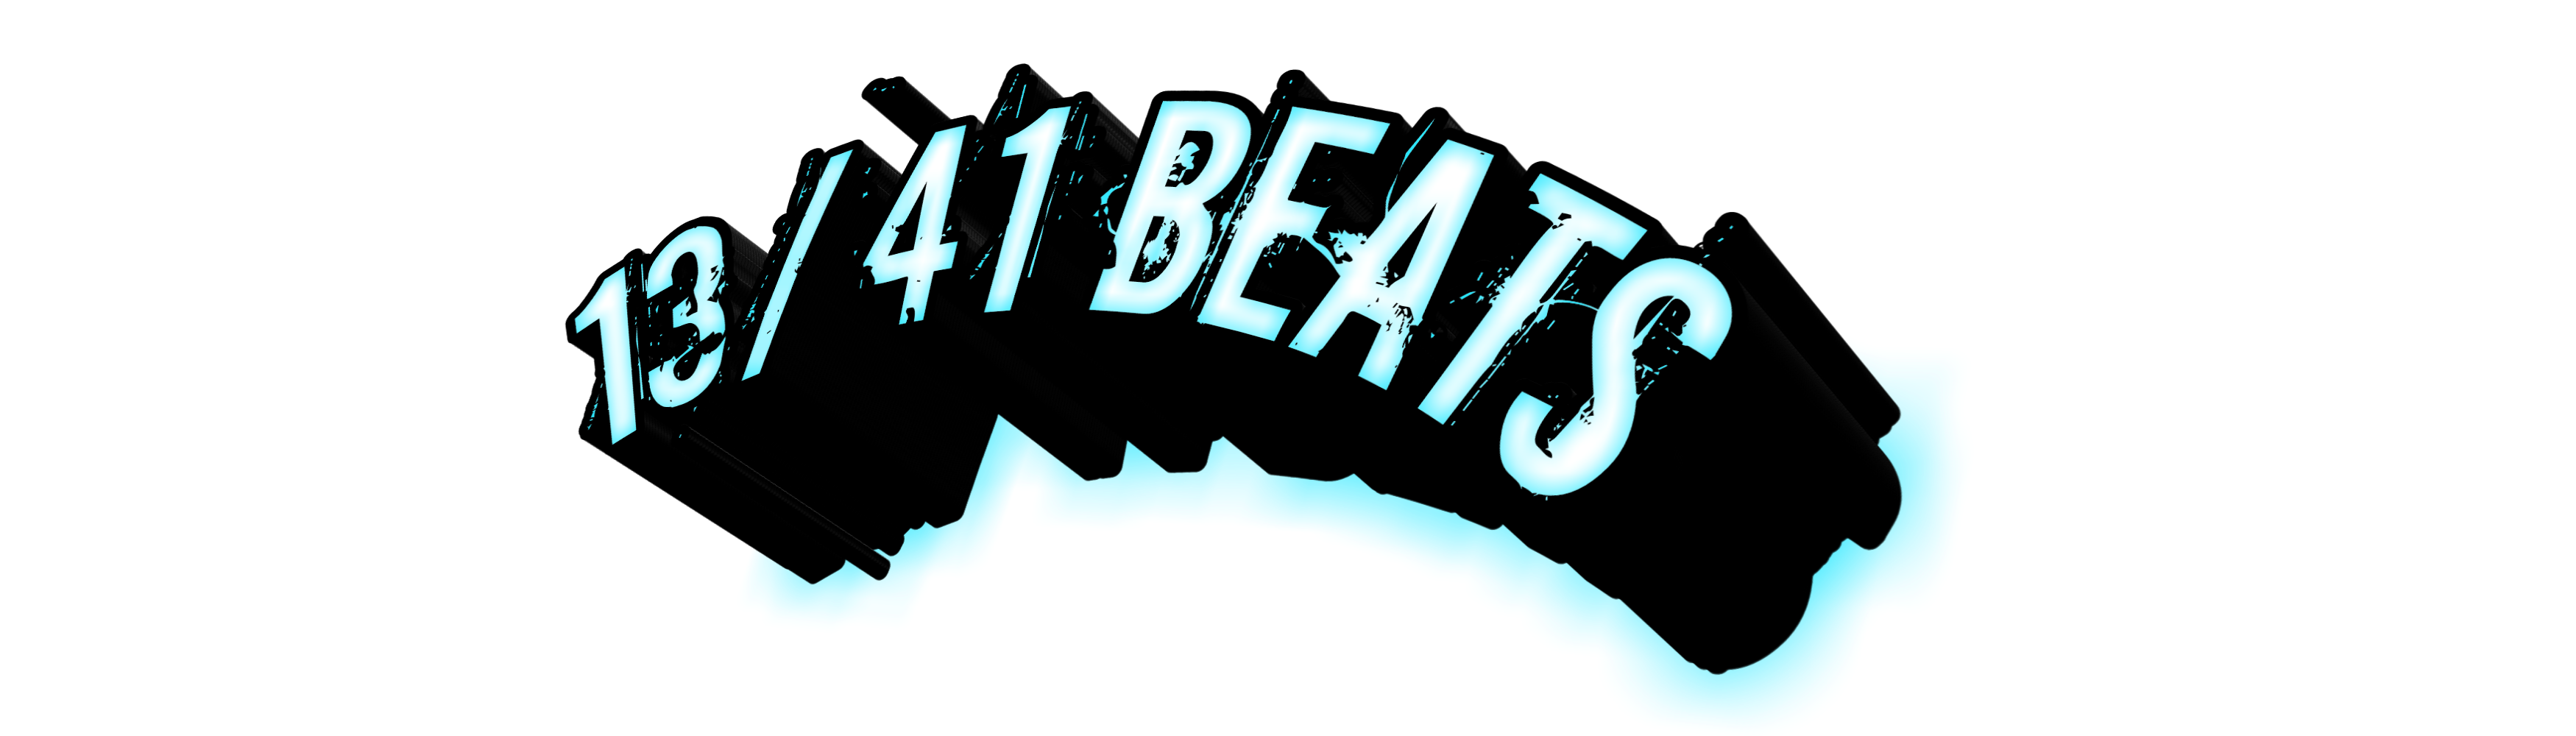 13/41 Beats